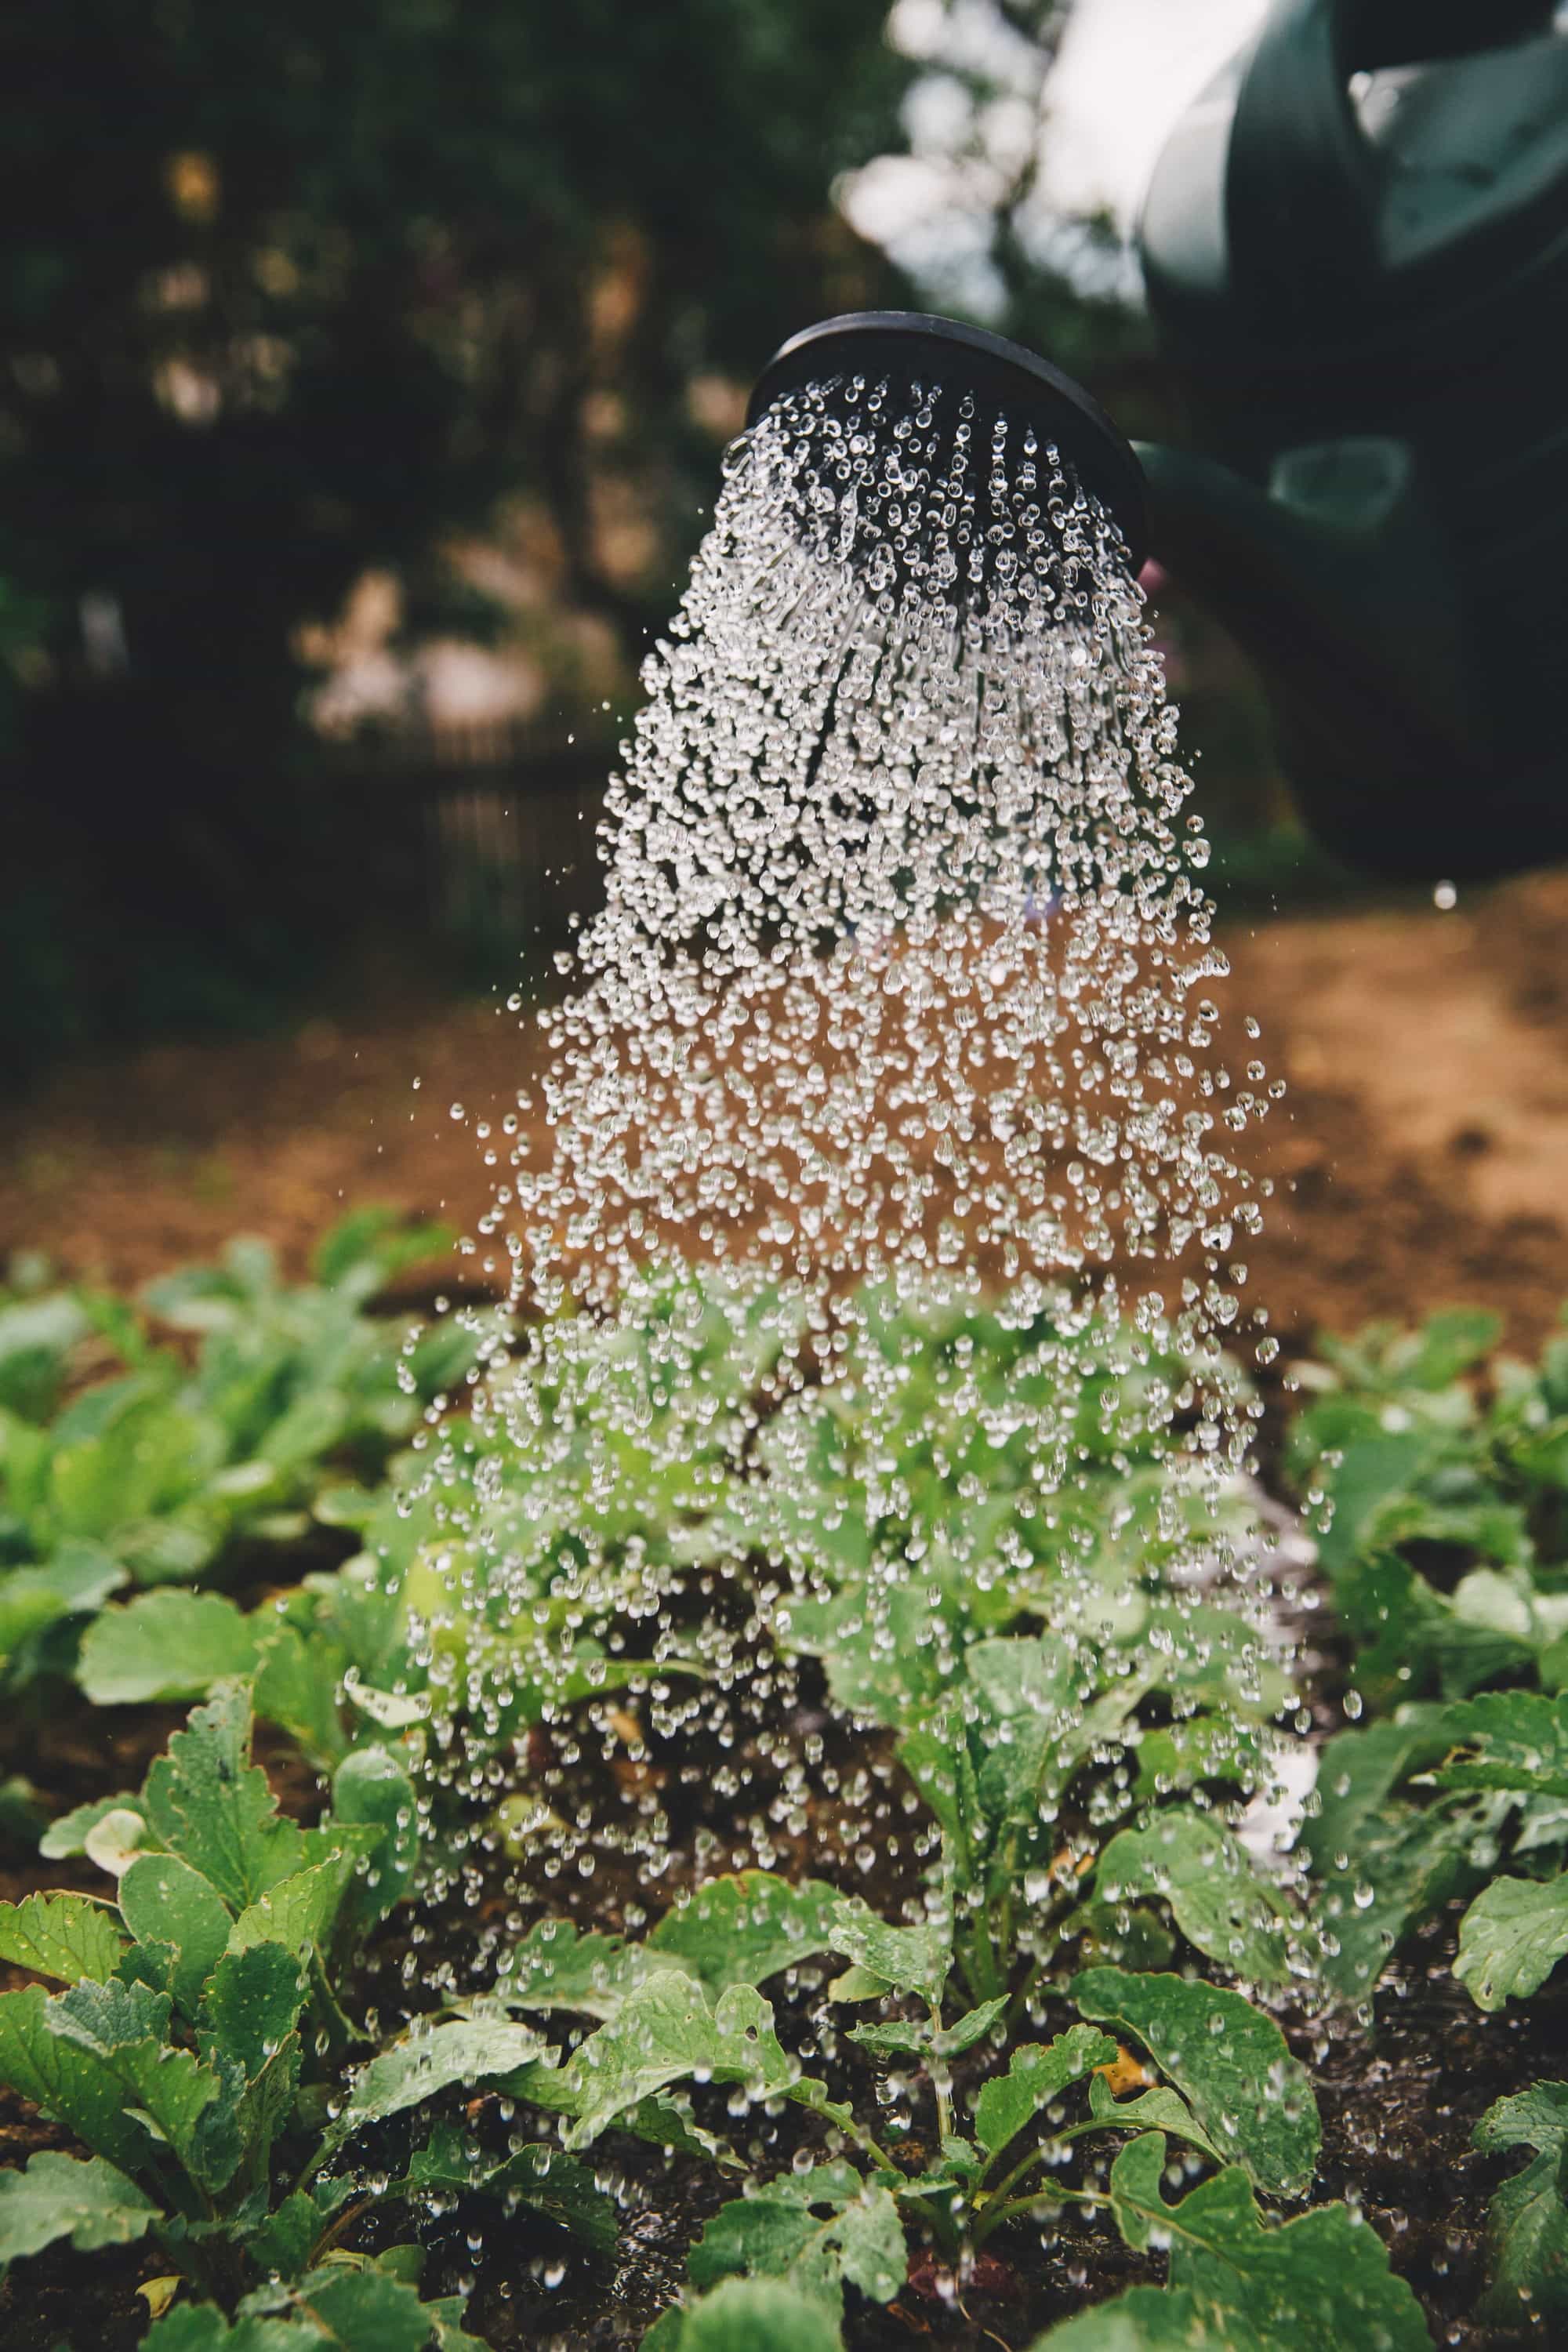 watering a garden